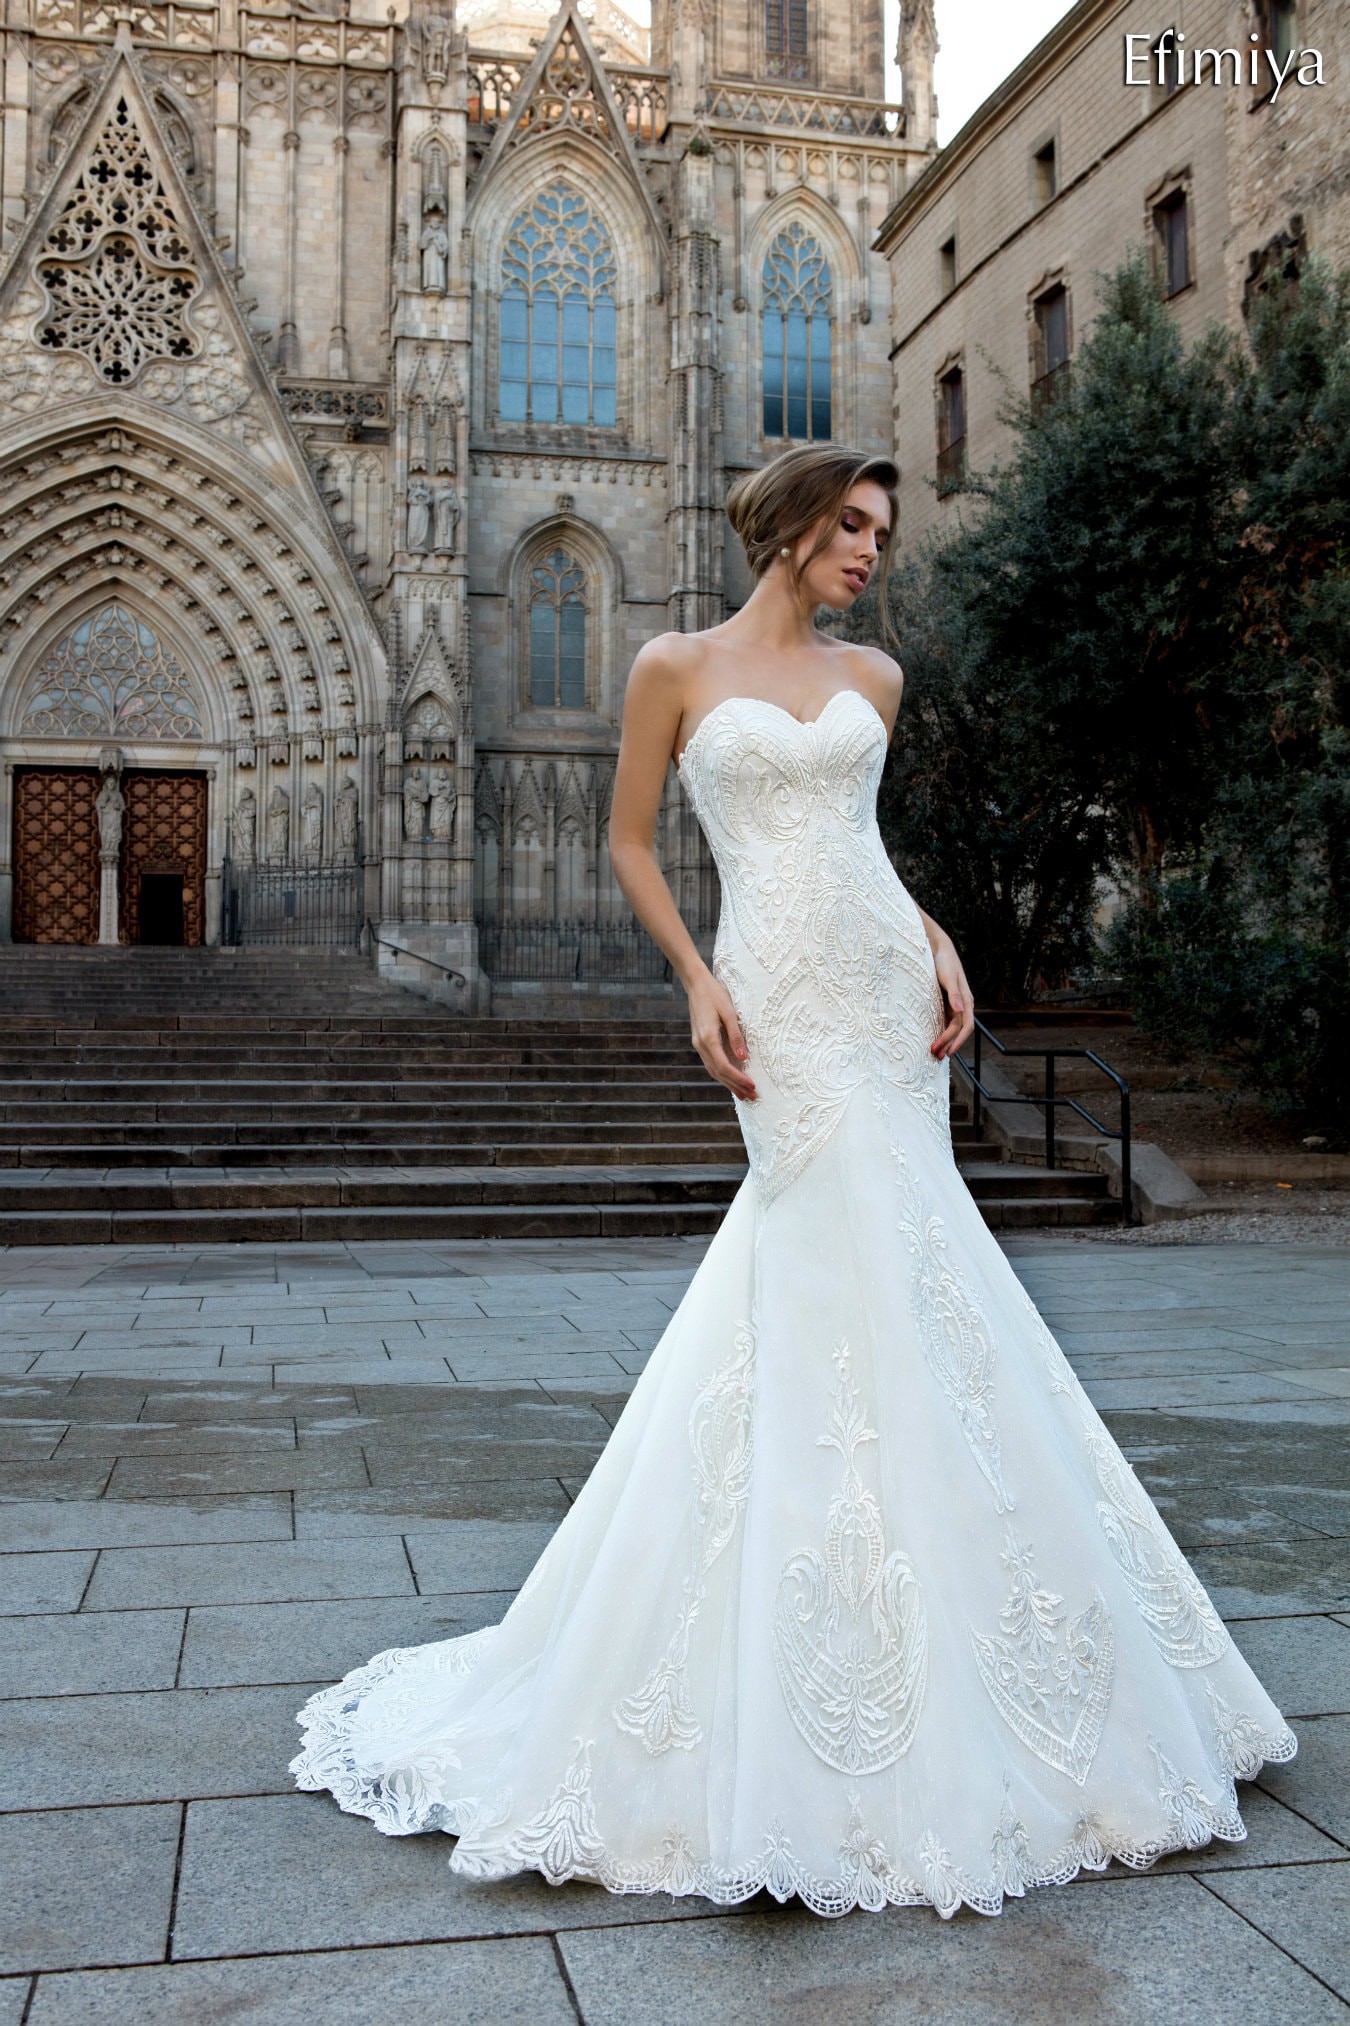 La Petra Lux Efimiya Preowned Wedding Dress Save 71% - Stillwhite